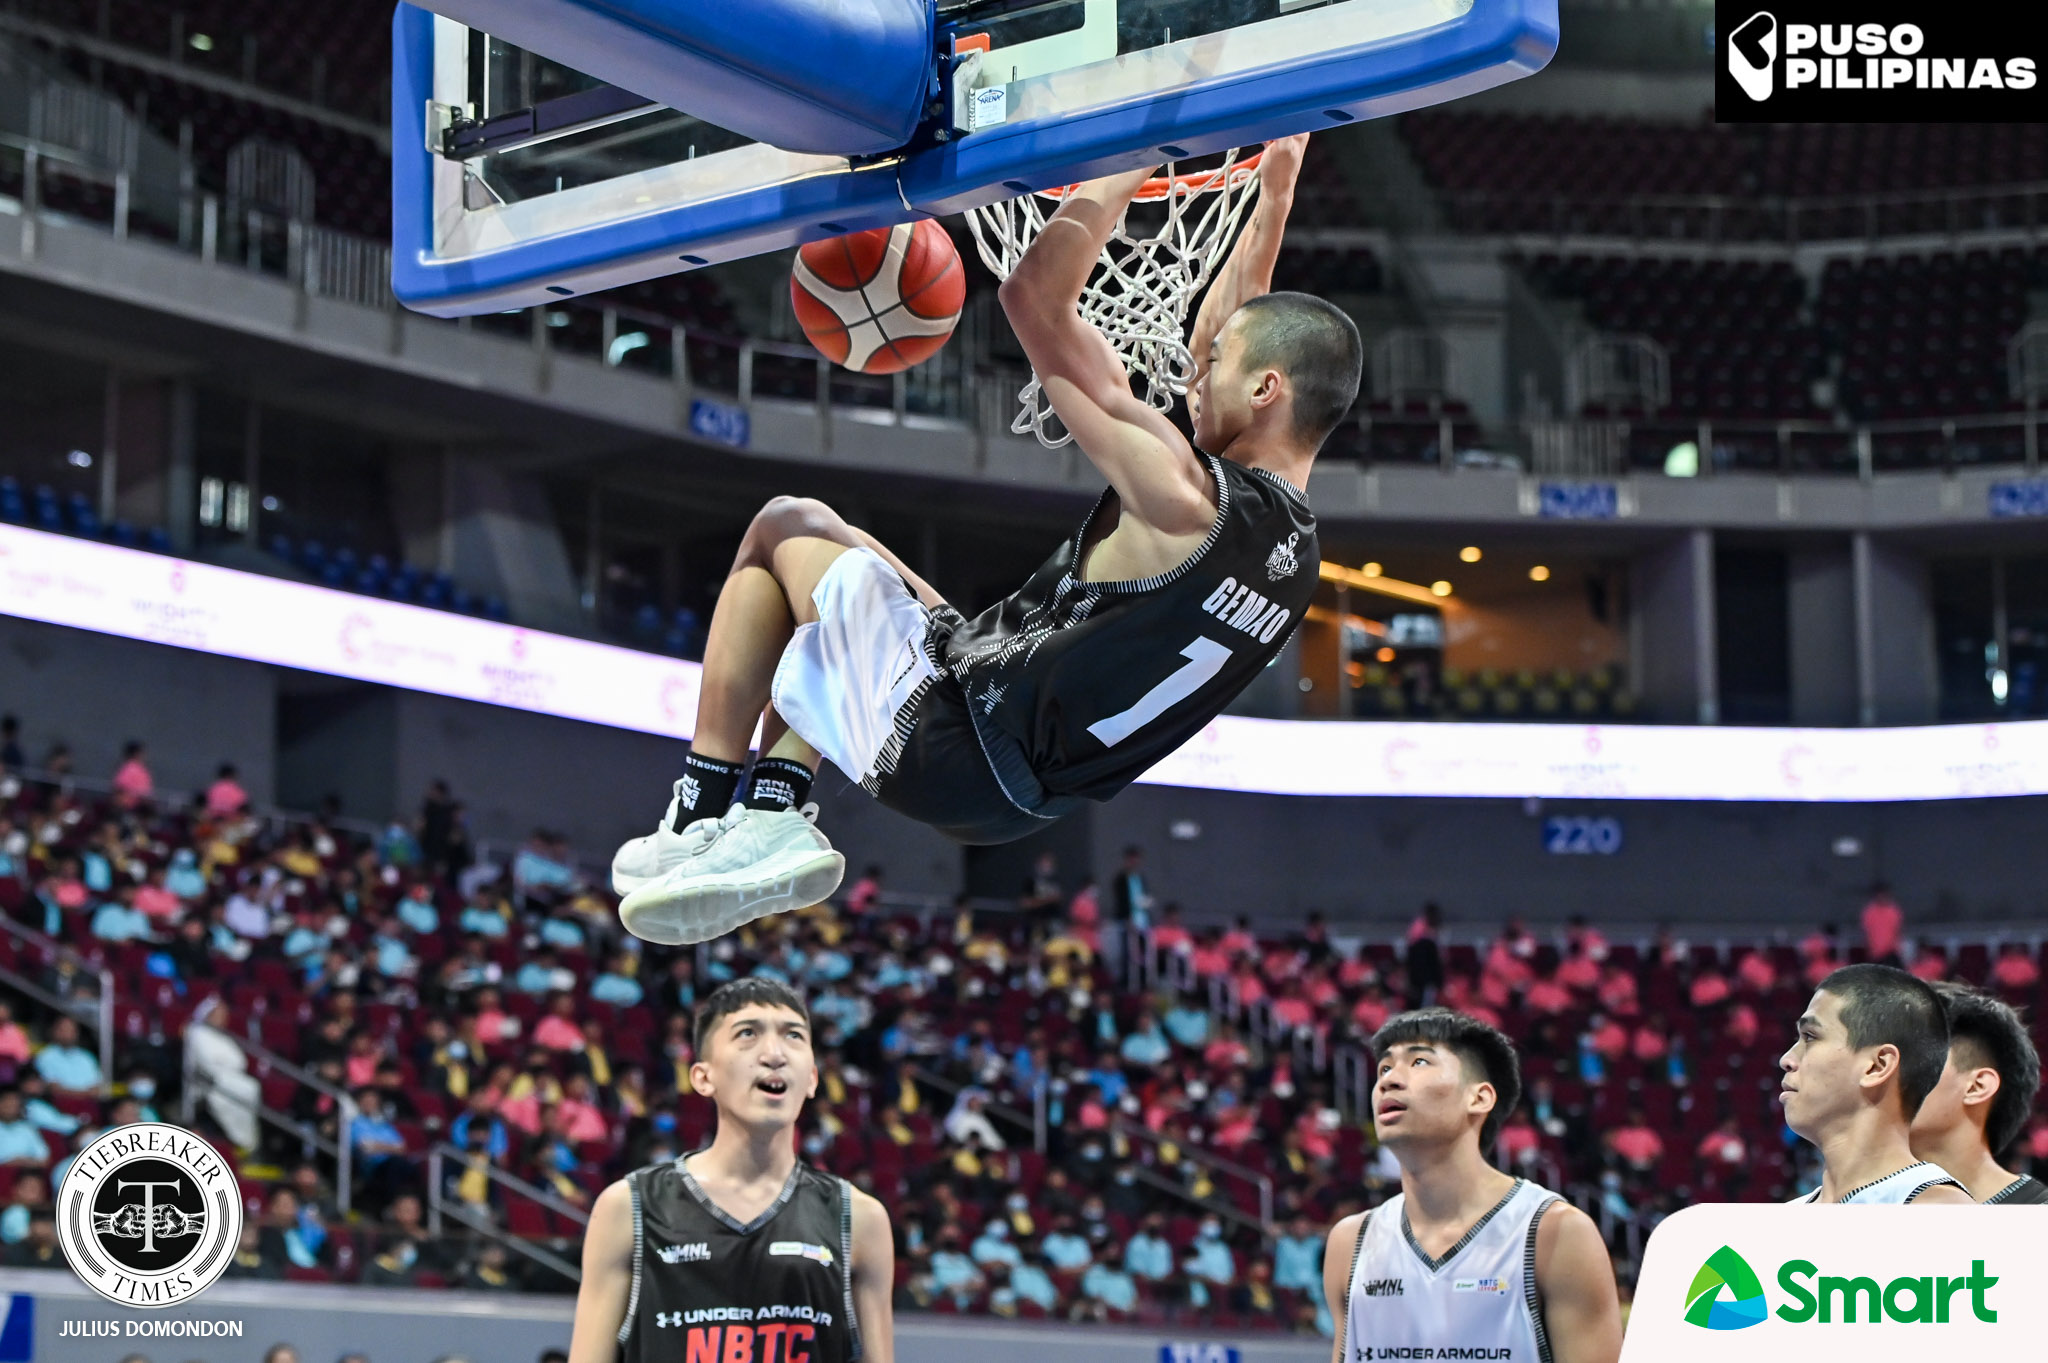 NBTC-ANDY-GEMAO-1476 Smart NBTC: SJ Moore shines brightest in All-Star Showcase Basketball NBTC News  - philippine sports news